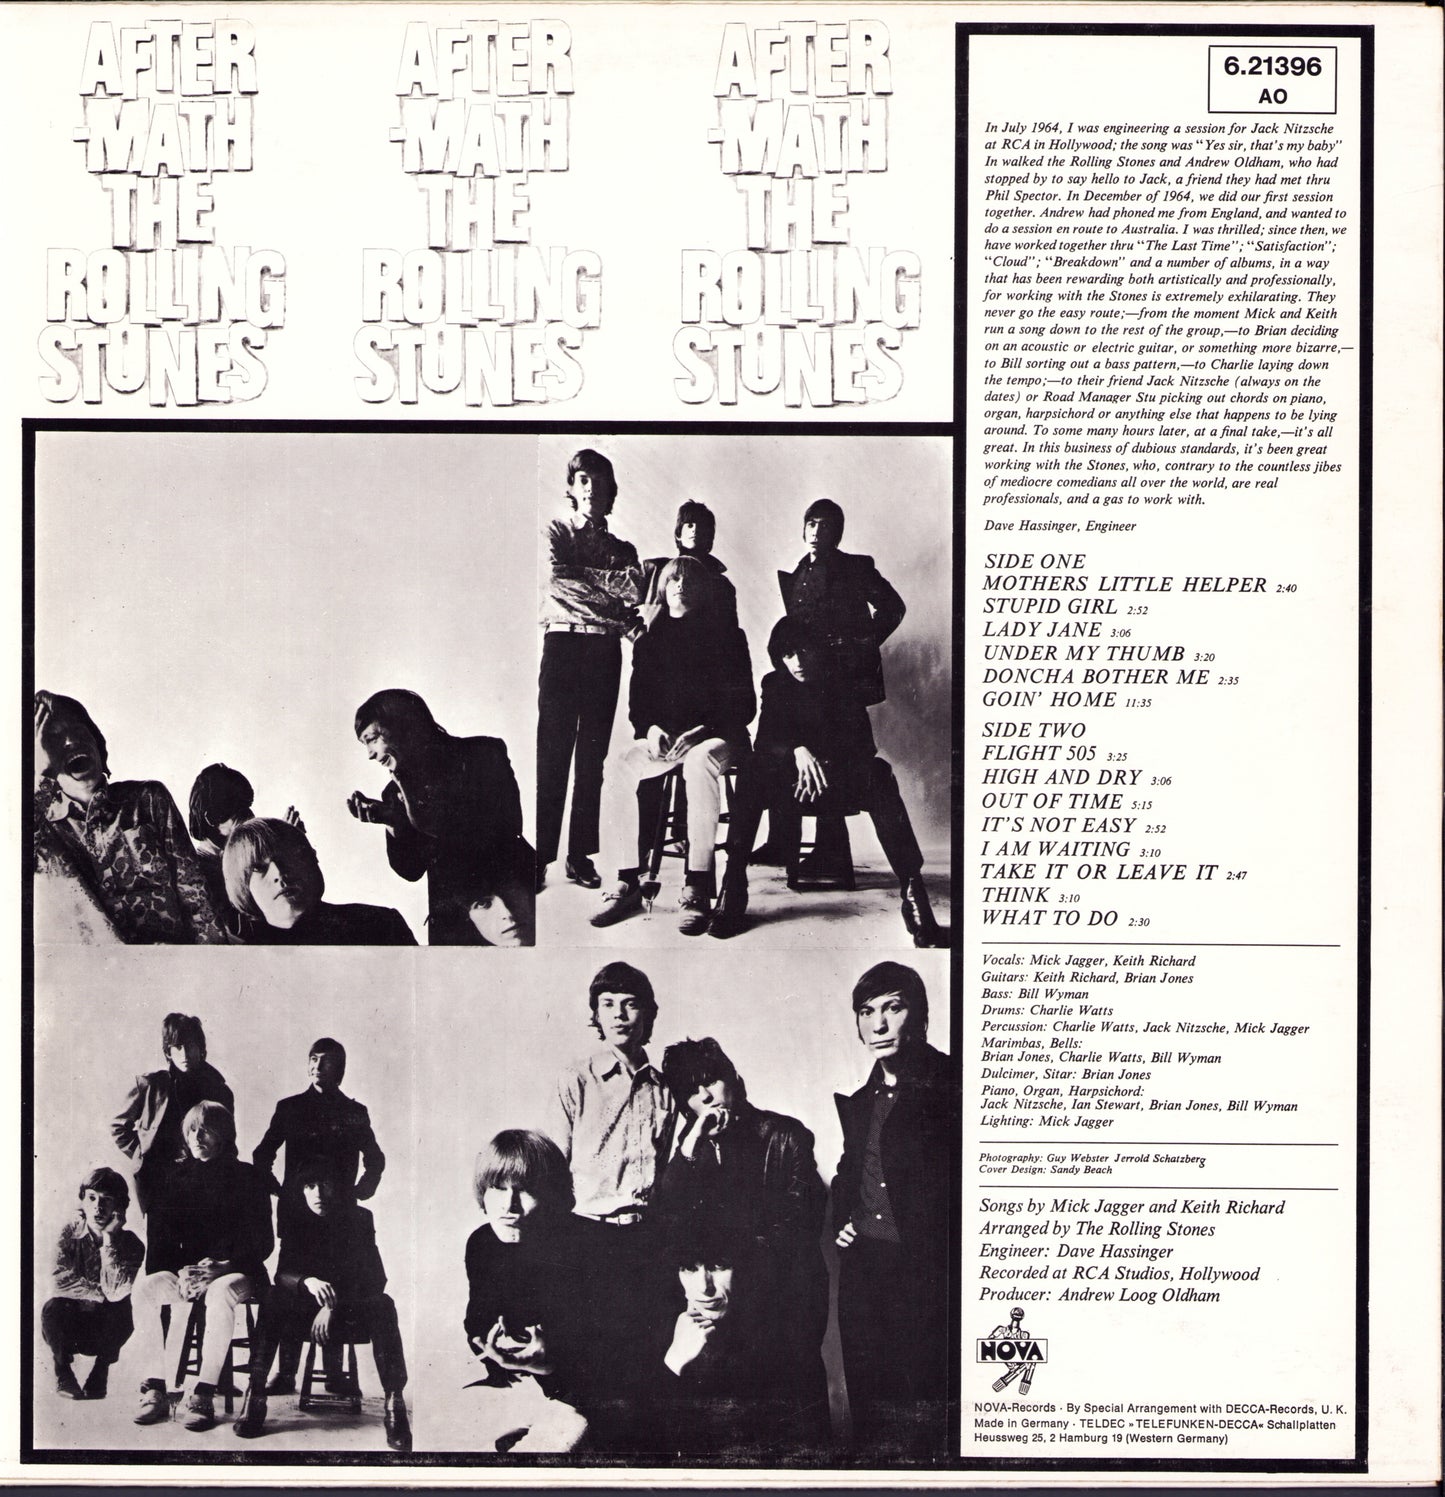 The Rolling Stones - After-Math Vinyl LP